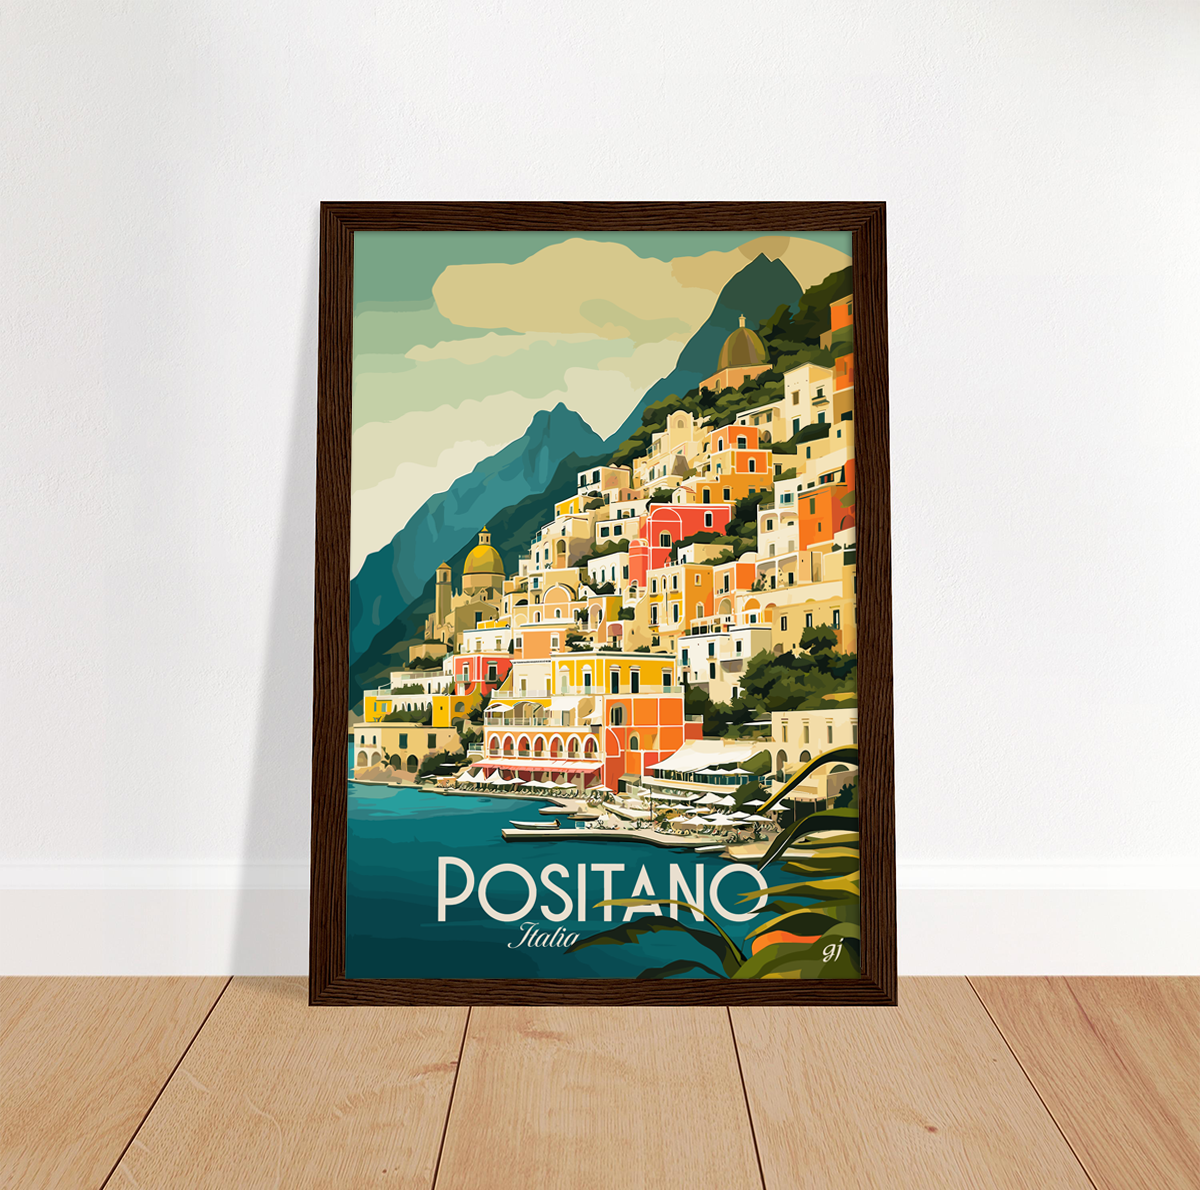 Positano poster by bon voyage design